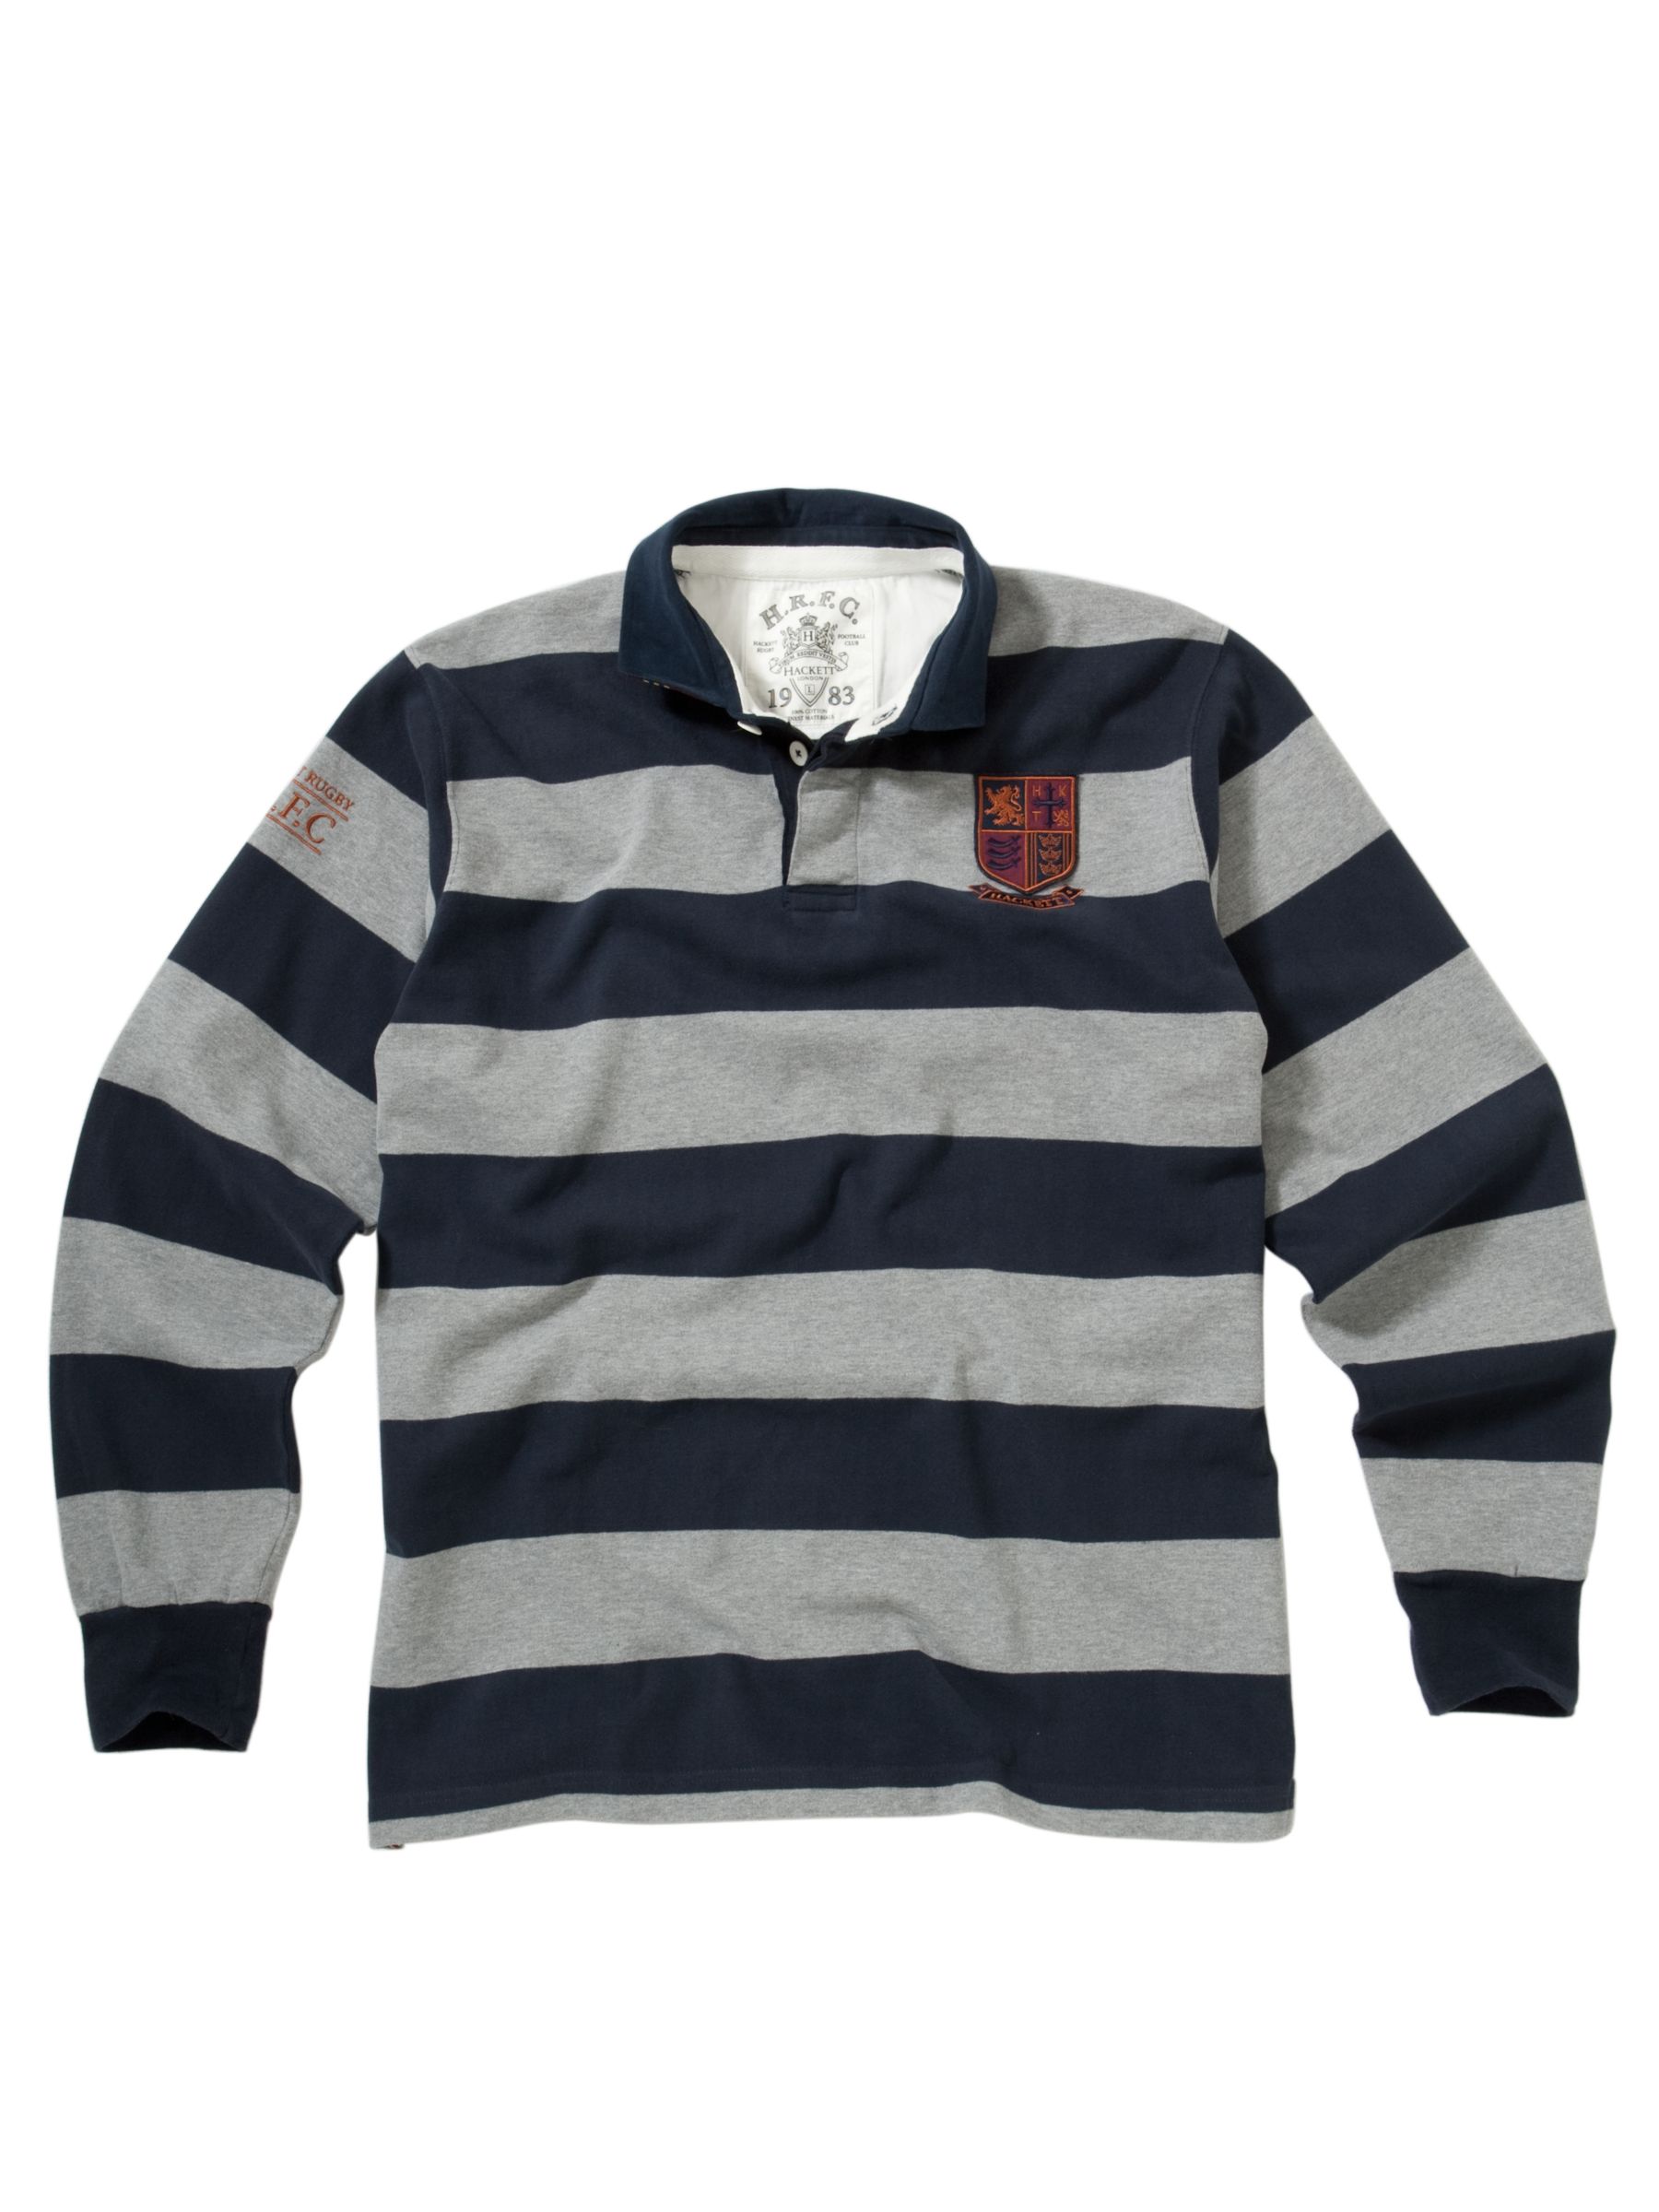 Hackett London Block Stripe Rugby Shirt, Navy/Grey